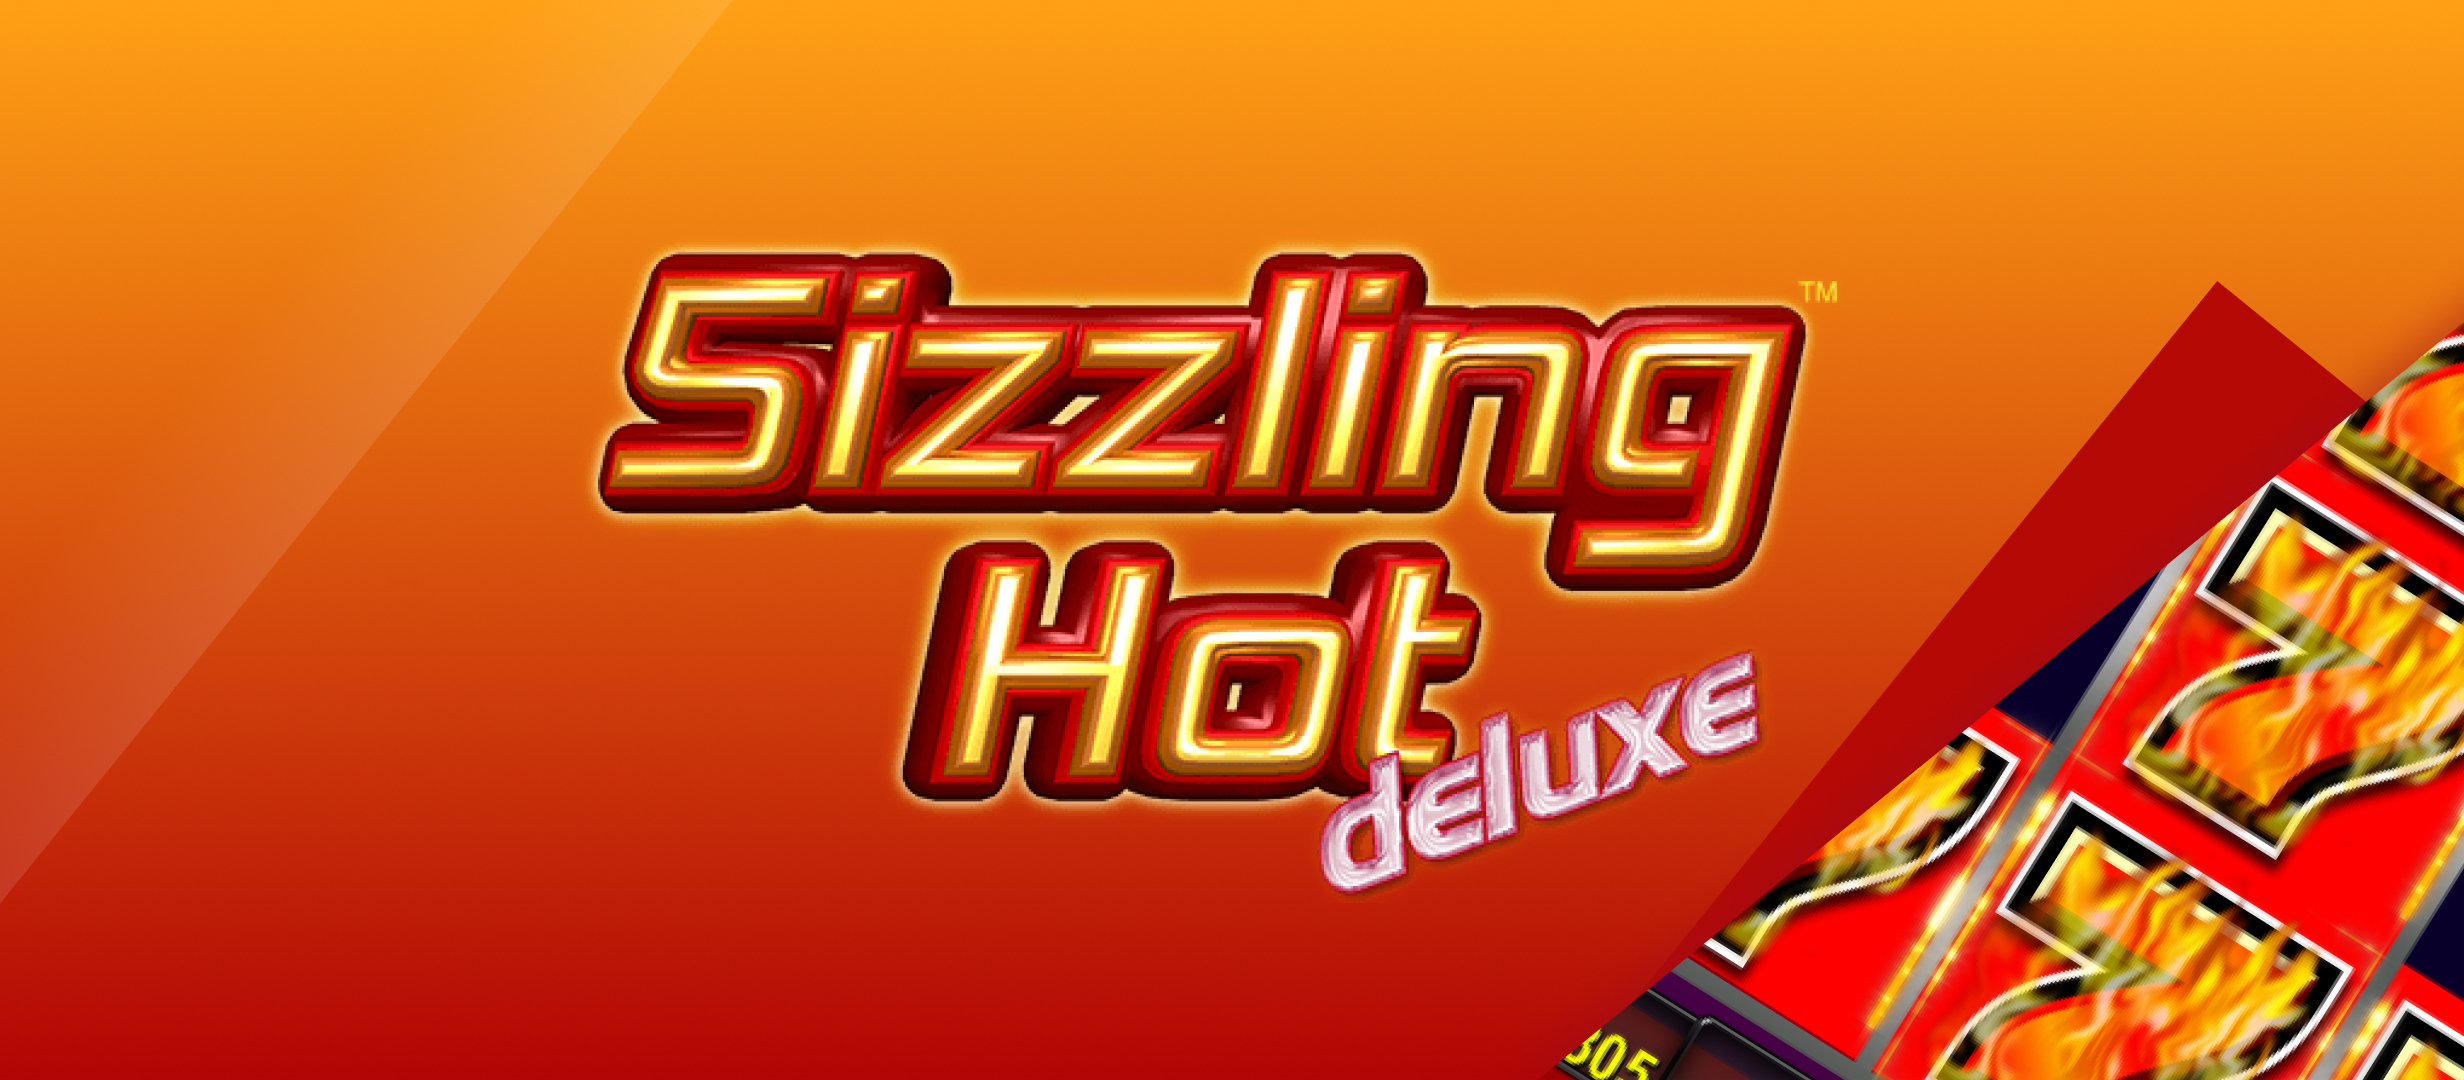 Cazino online: Sloturile lui Paul - Episodul 3 Sizzling Hot Deluxe